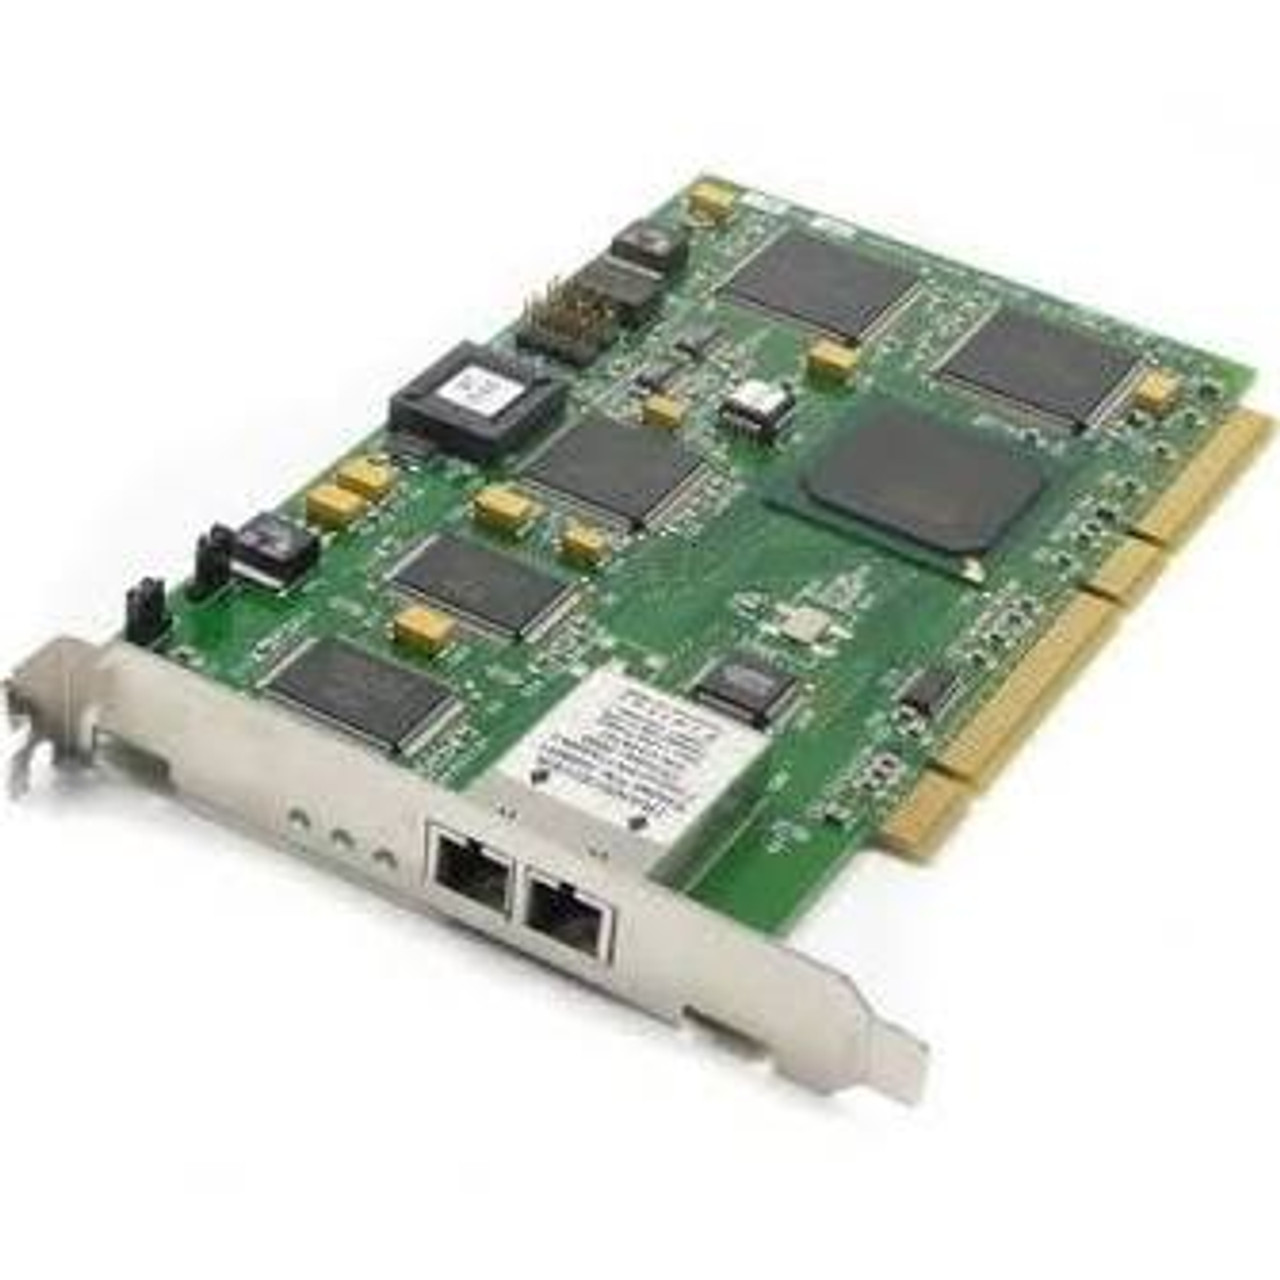 176804-002 - HP LP8000 Fiber Channel Host Bus Adapter 2 x SC PCI 1.06 Gbps